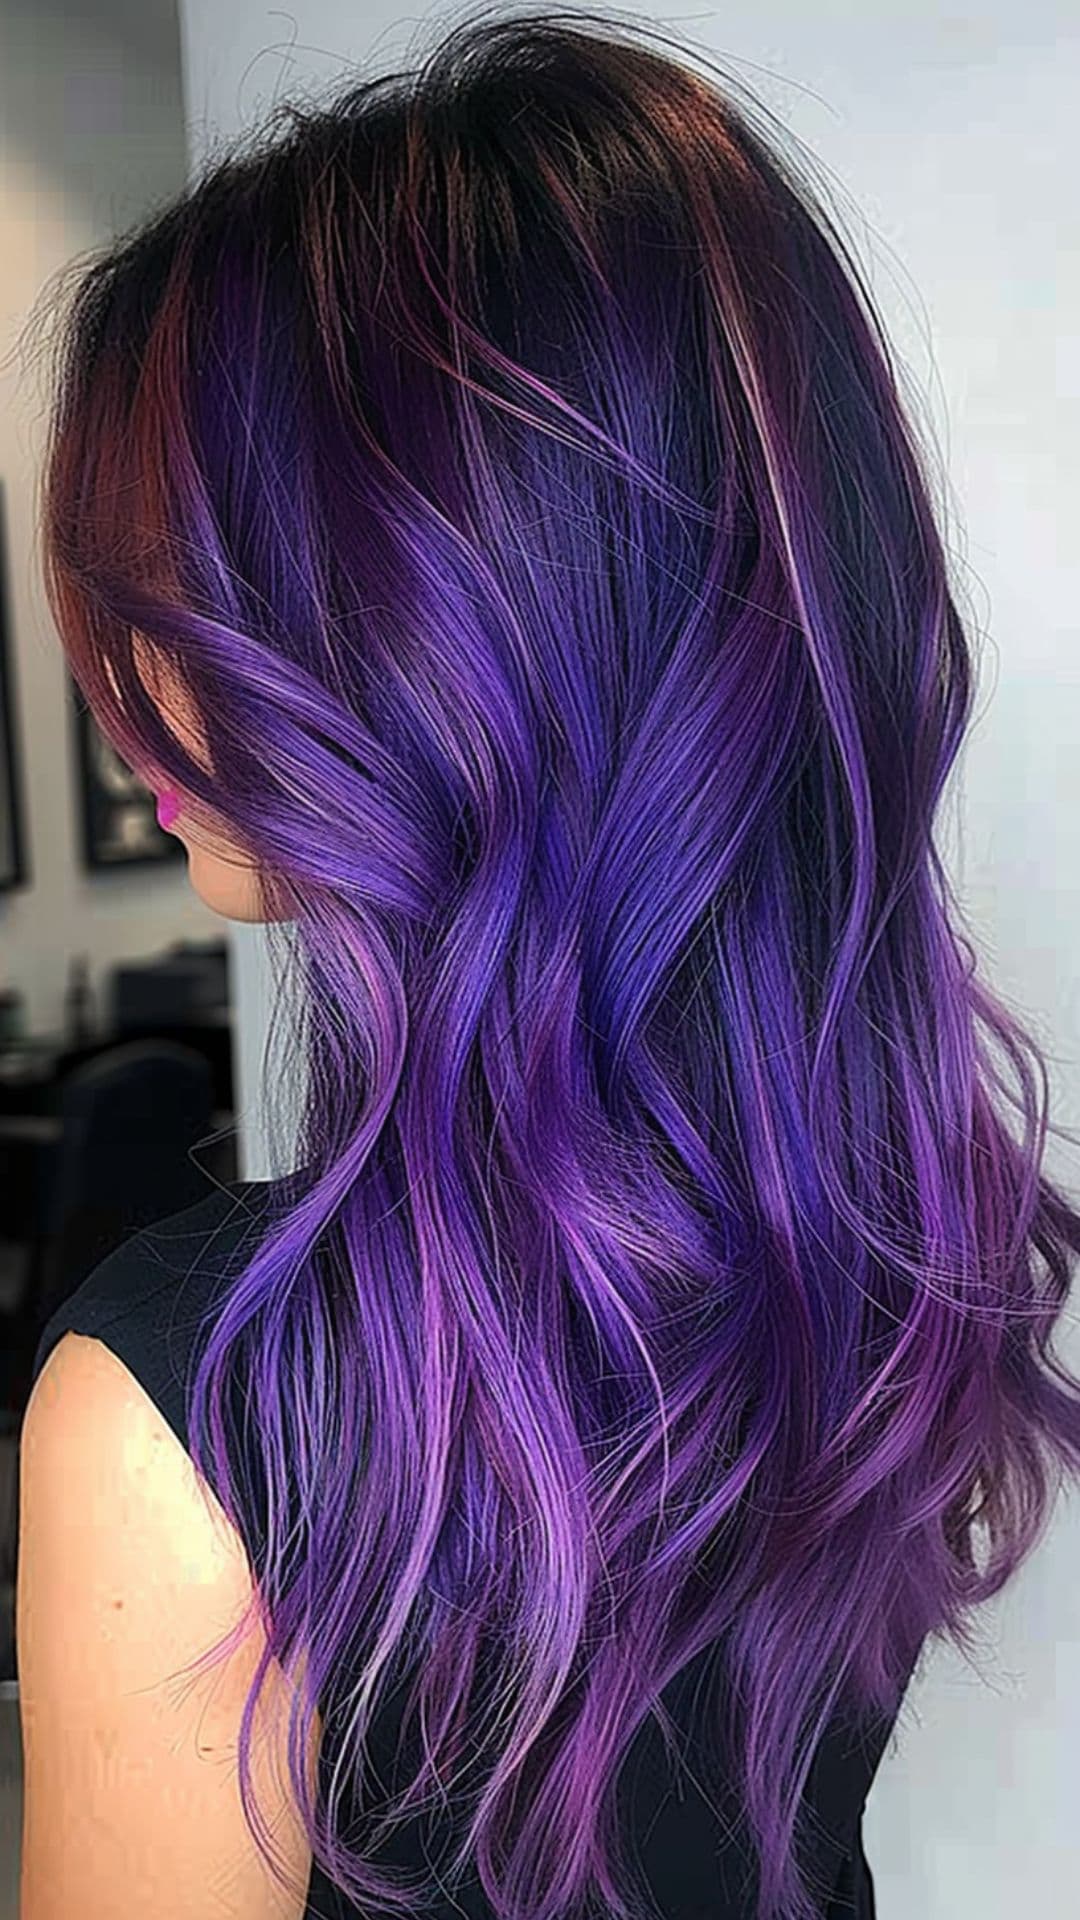 A woman modelling a purple gradient hair.